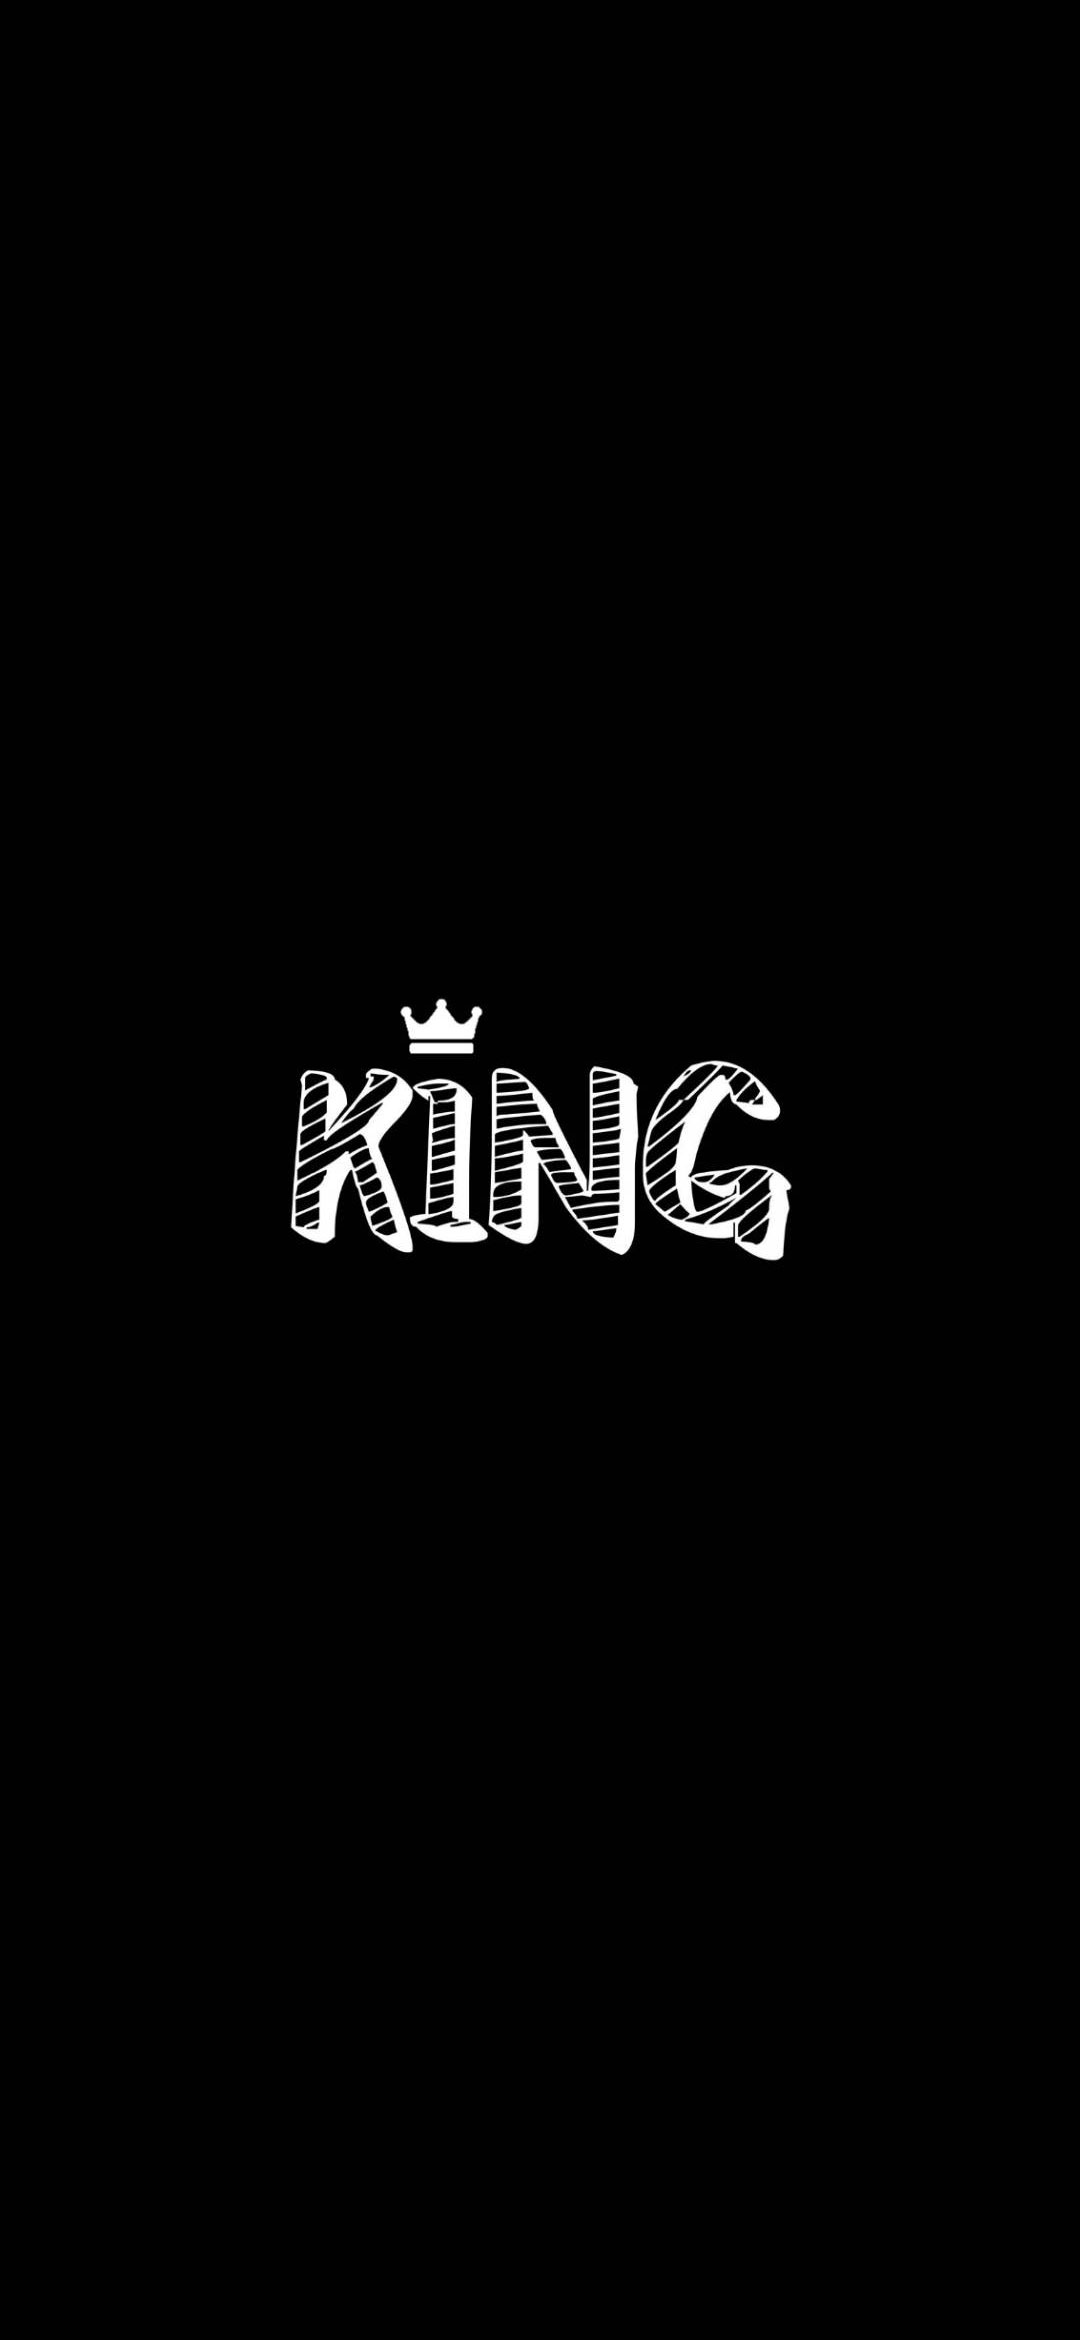 King wallpaper by ArifSoylemez  Download on ZEDGE  8ae7